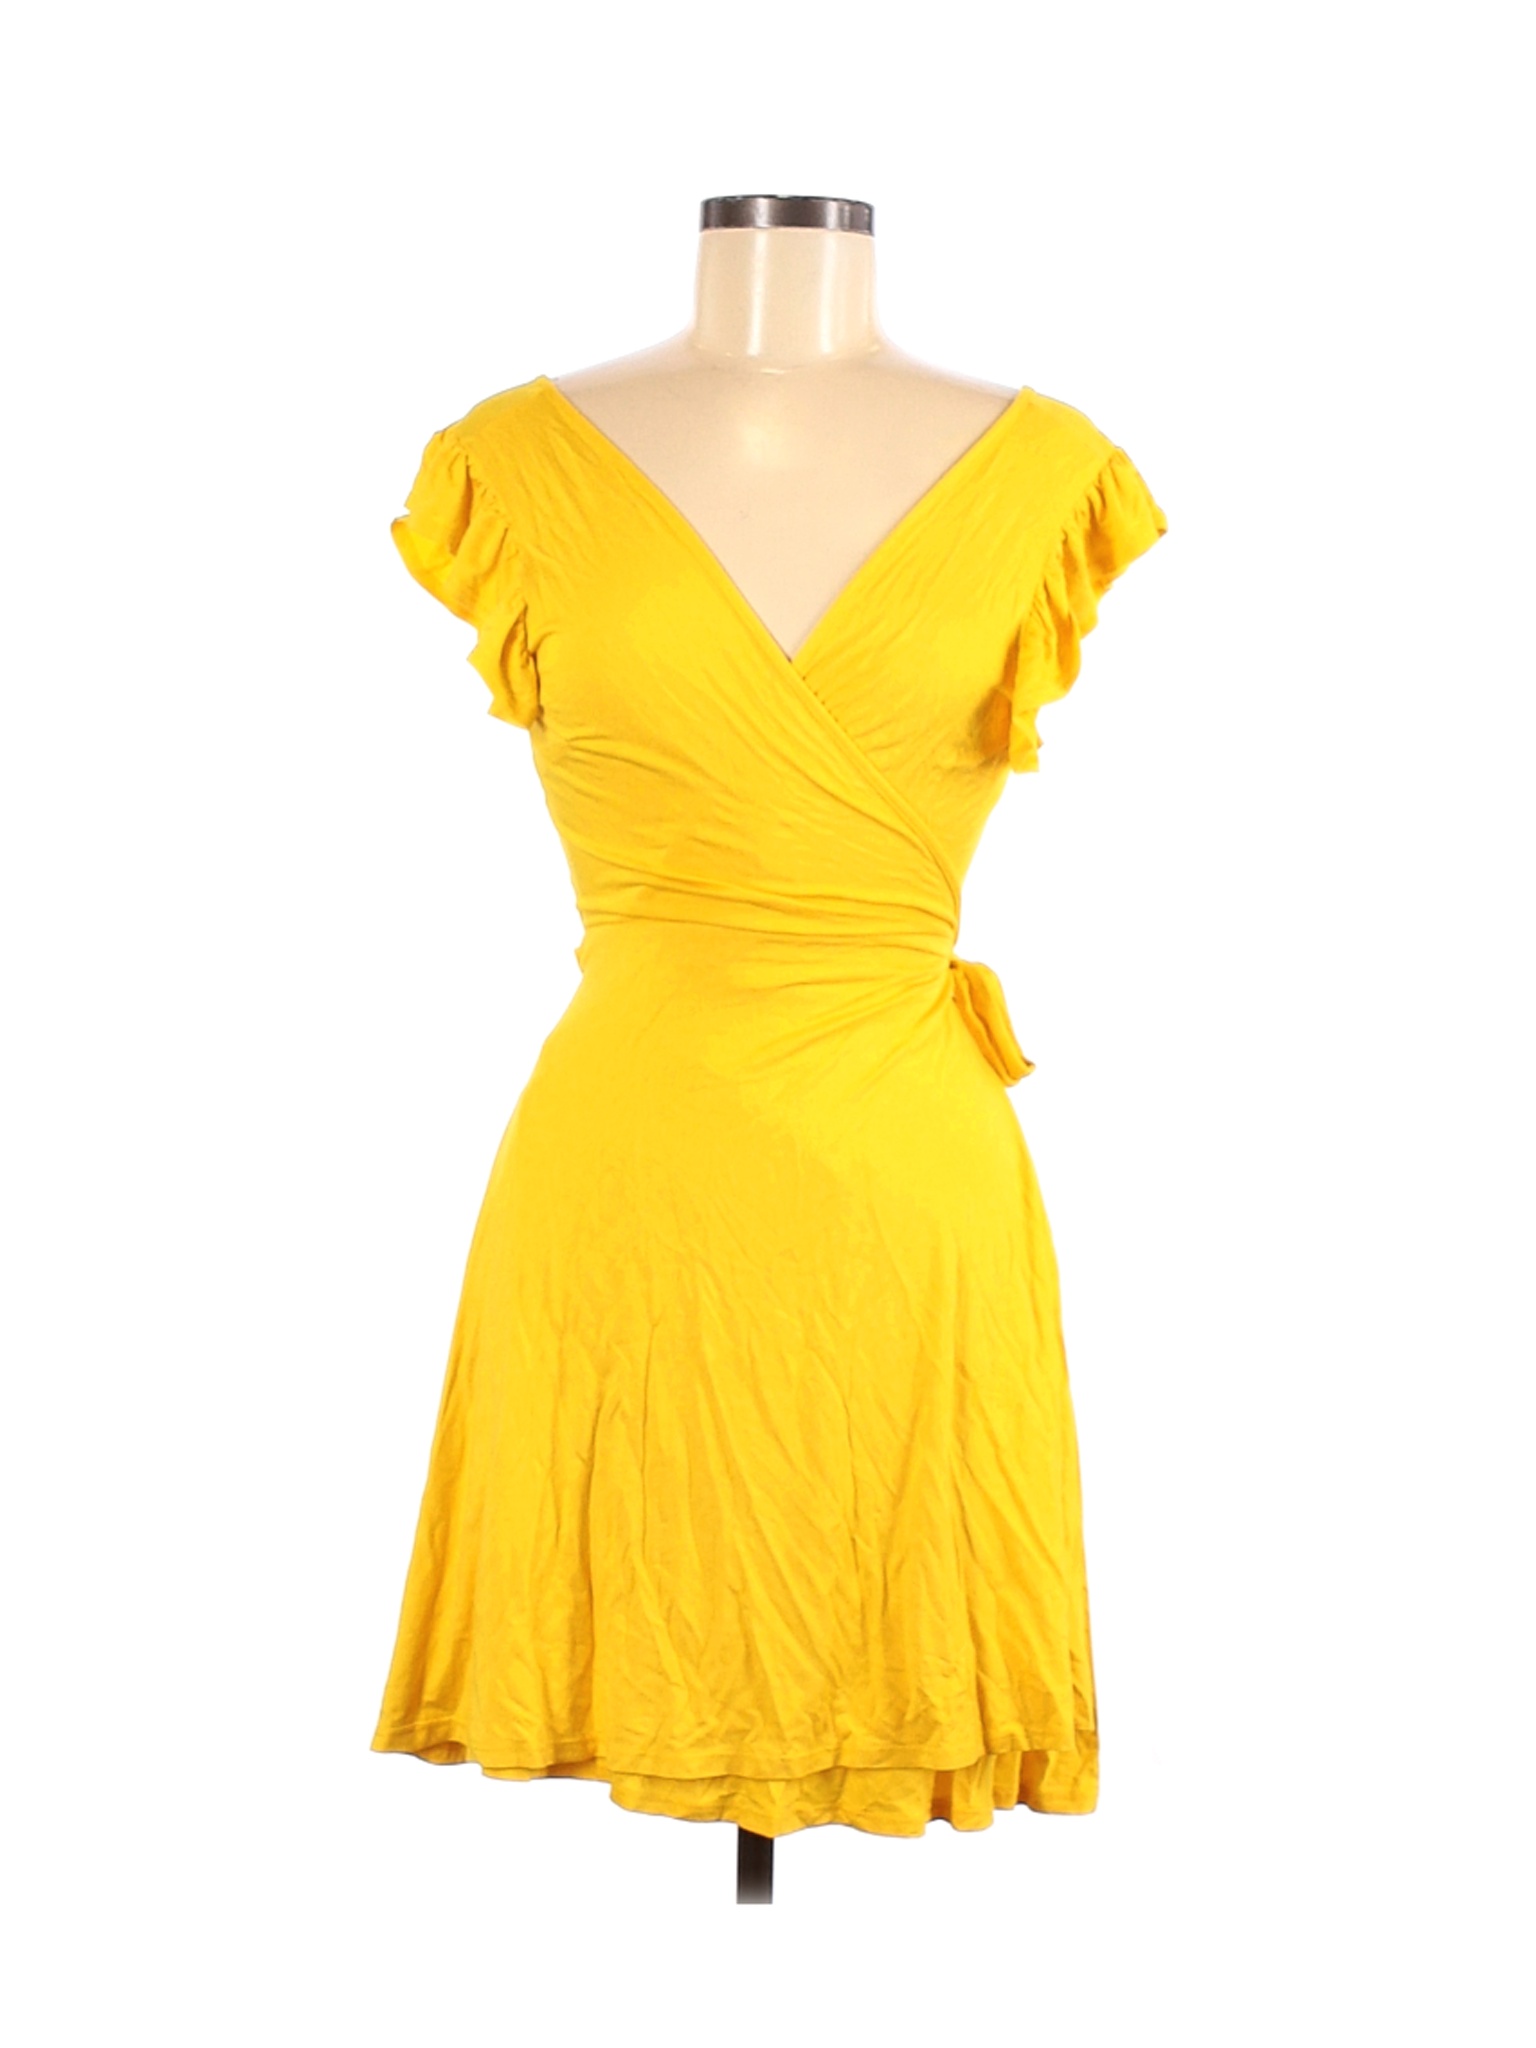 ASOS Women Yellow Casual Dress 6 | eBay